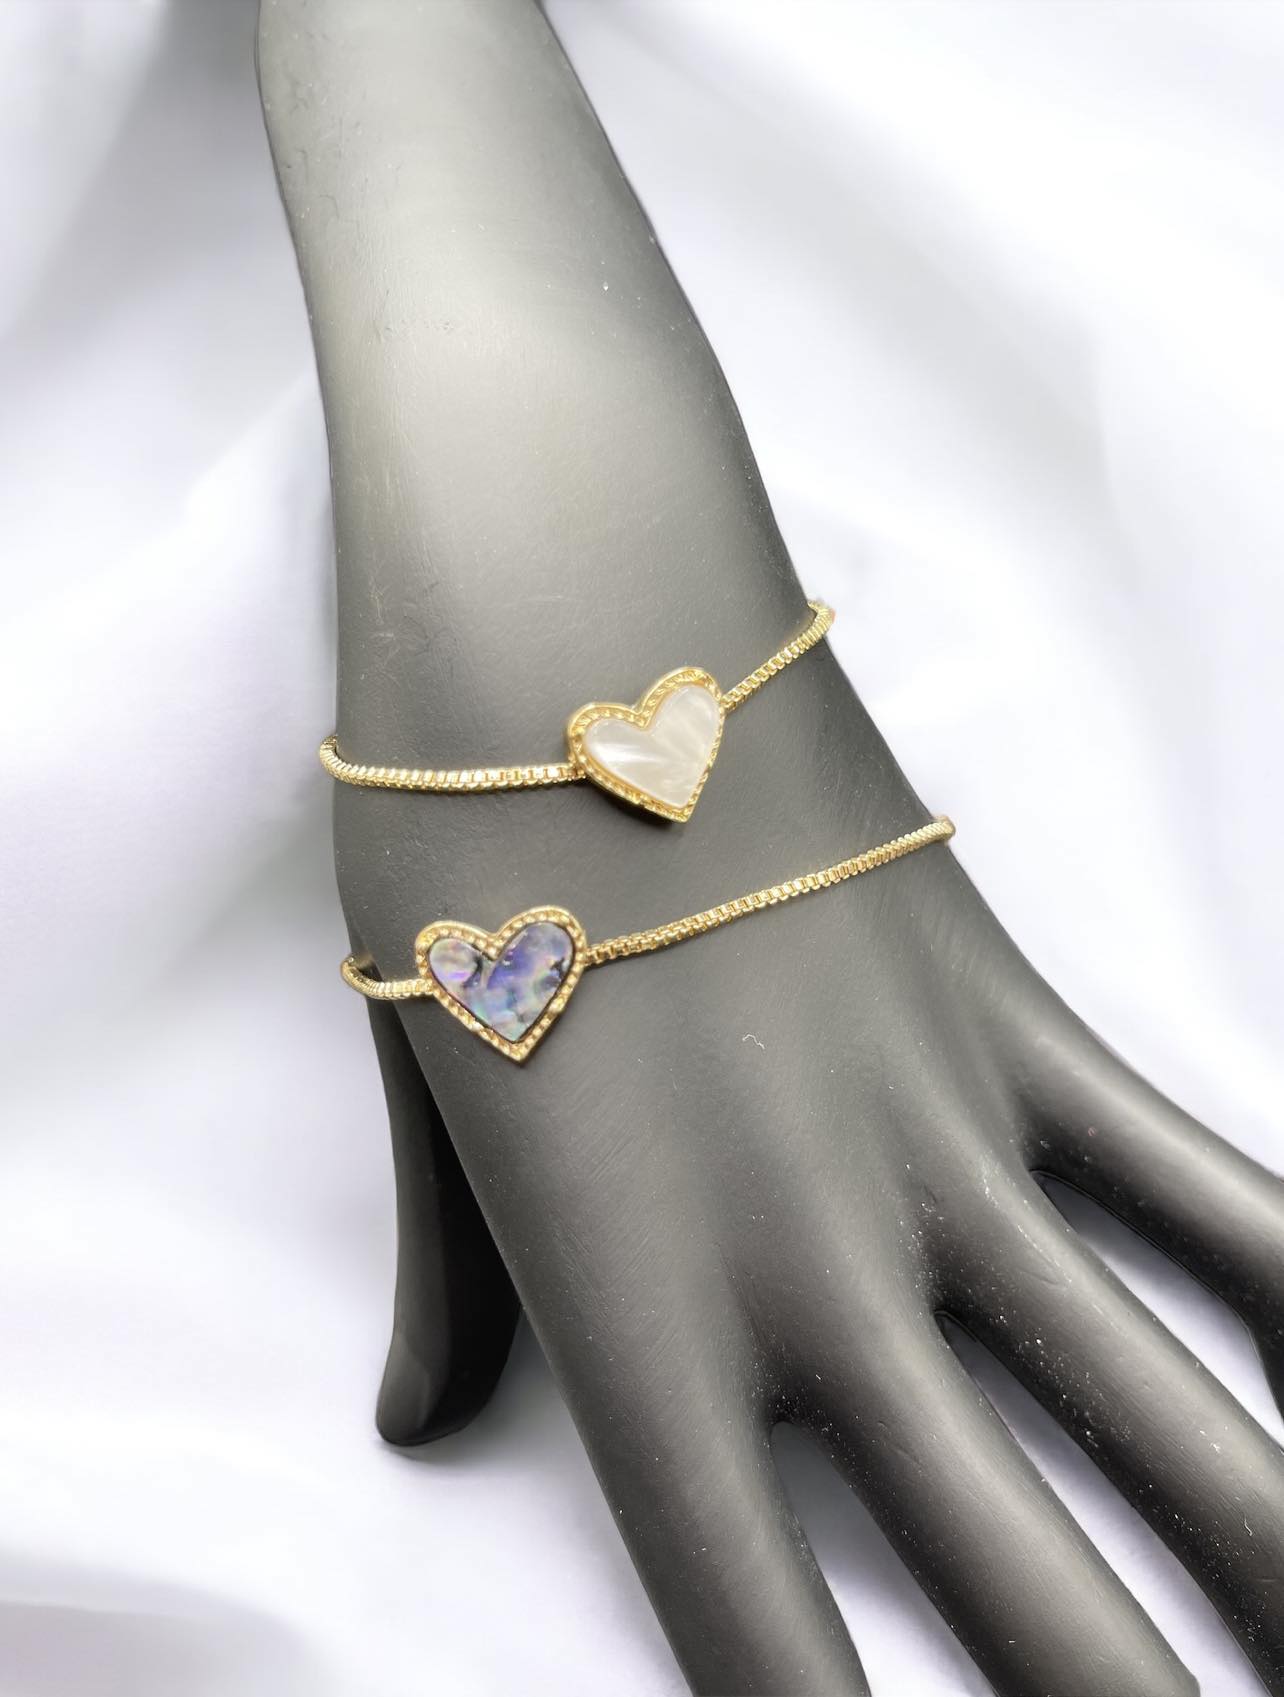 Brilliant blue heart shaped silver-plated bracelet